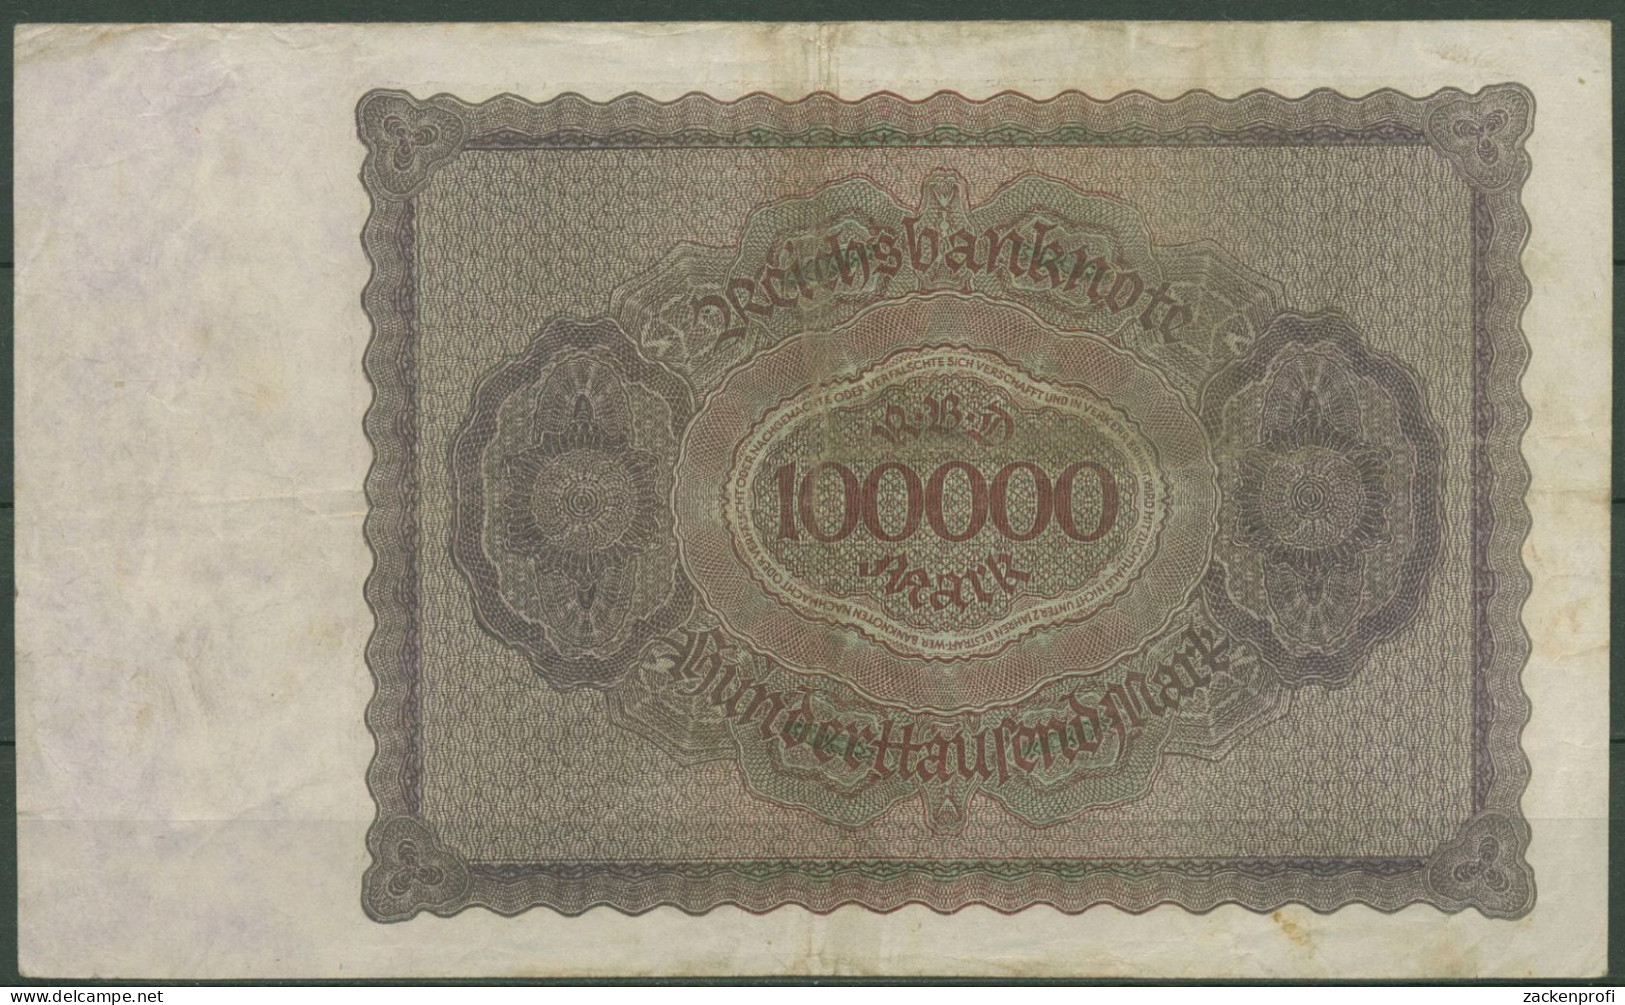 Dt. Reich 100000 Mark 1923, DEU-93a Serie Q, Gebraucht (K1386) - 100000 Mark